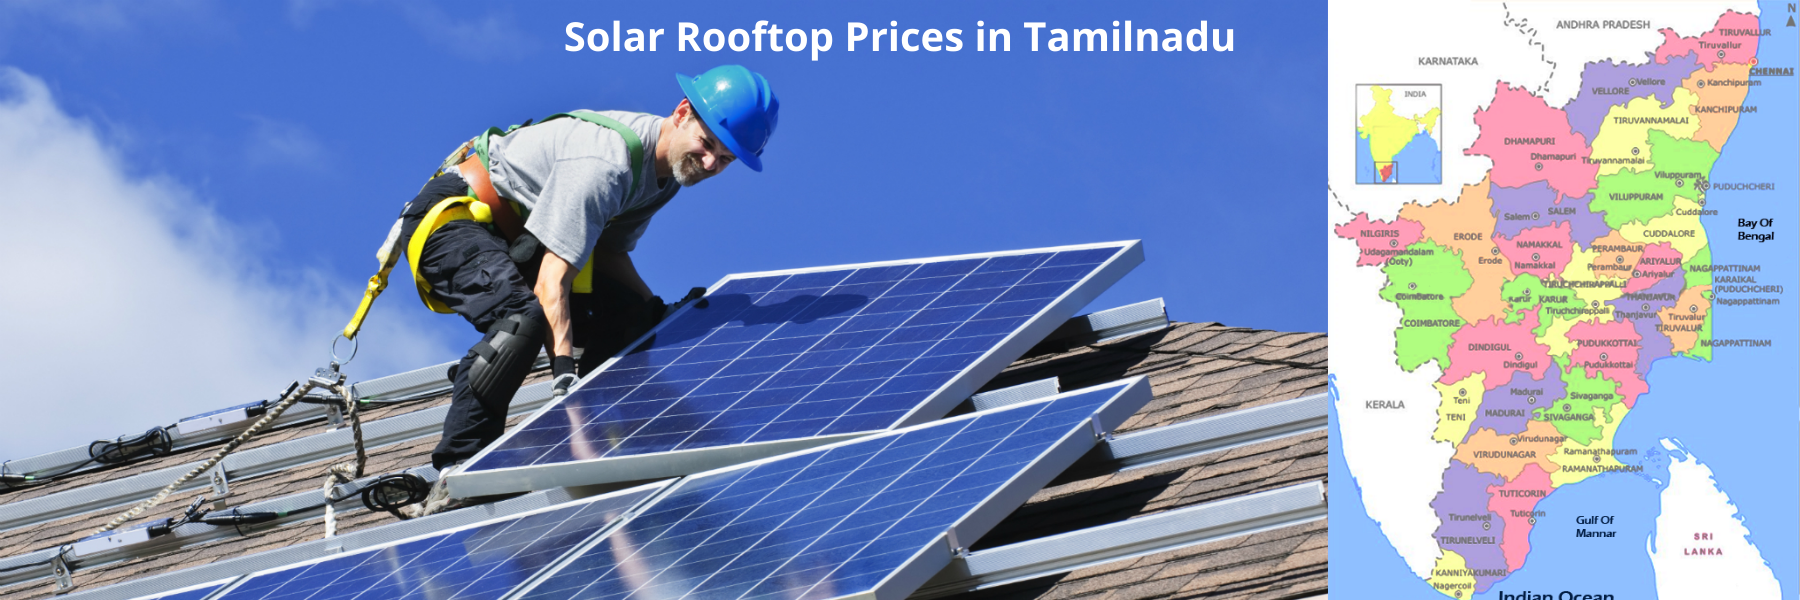 Off-Grid solar rooftop installation prices in Tamil Nadu, 2021-22